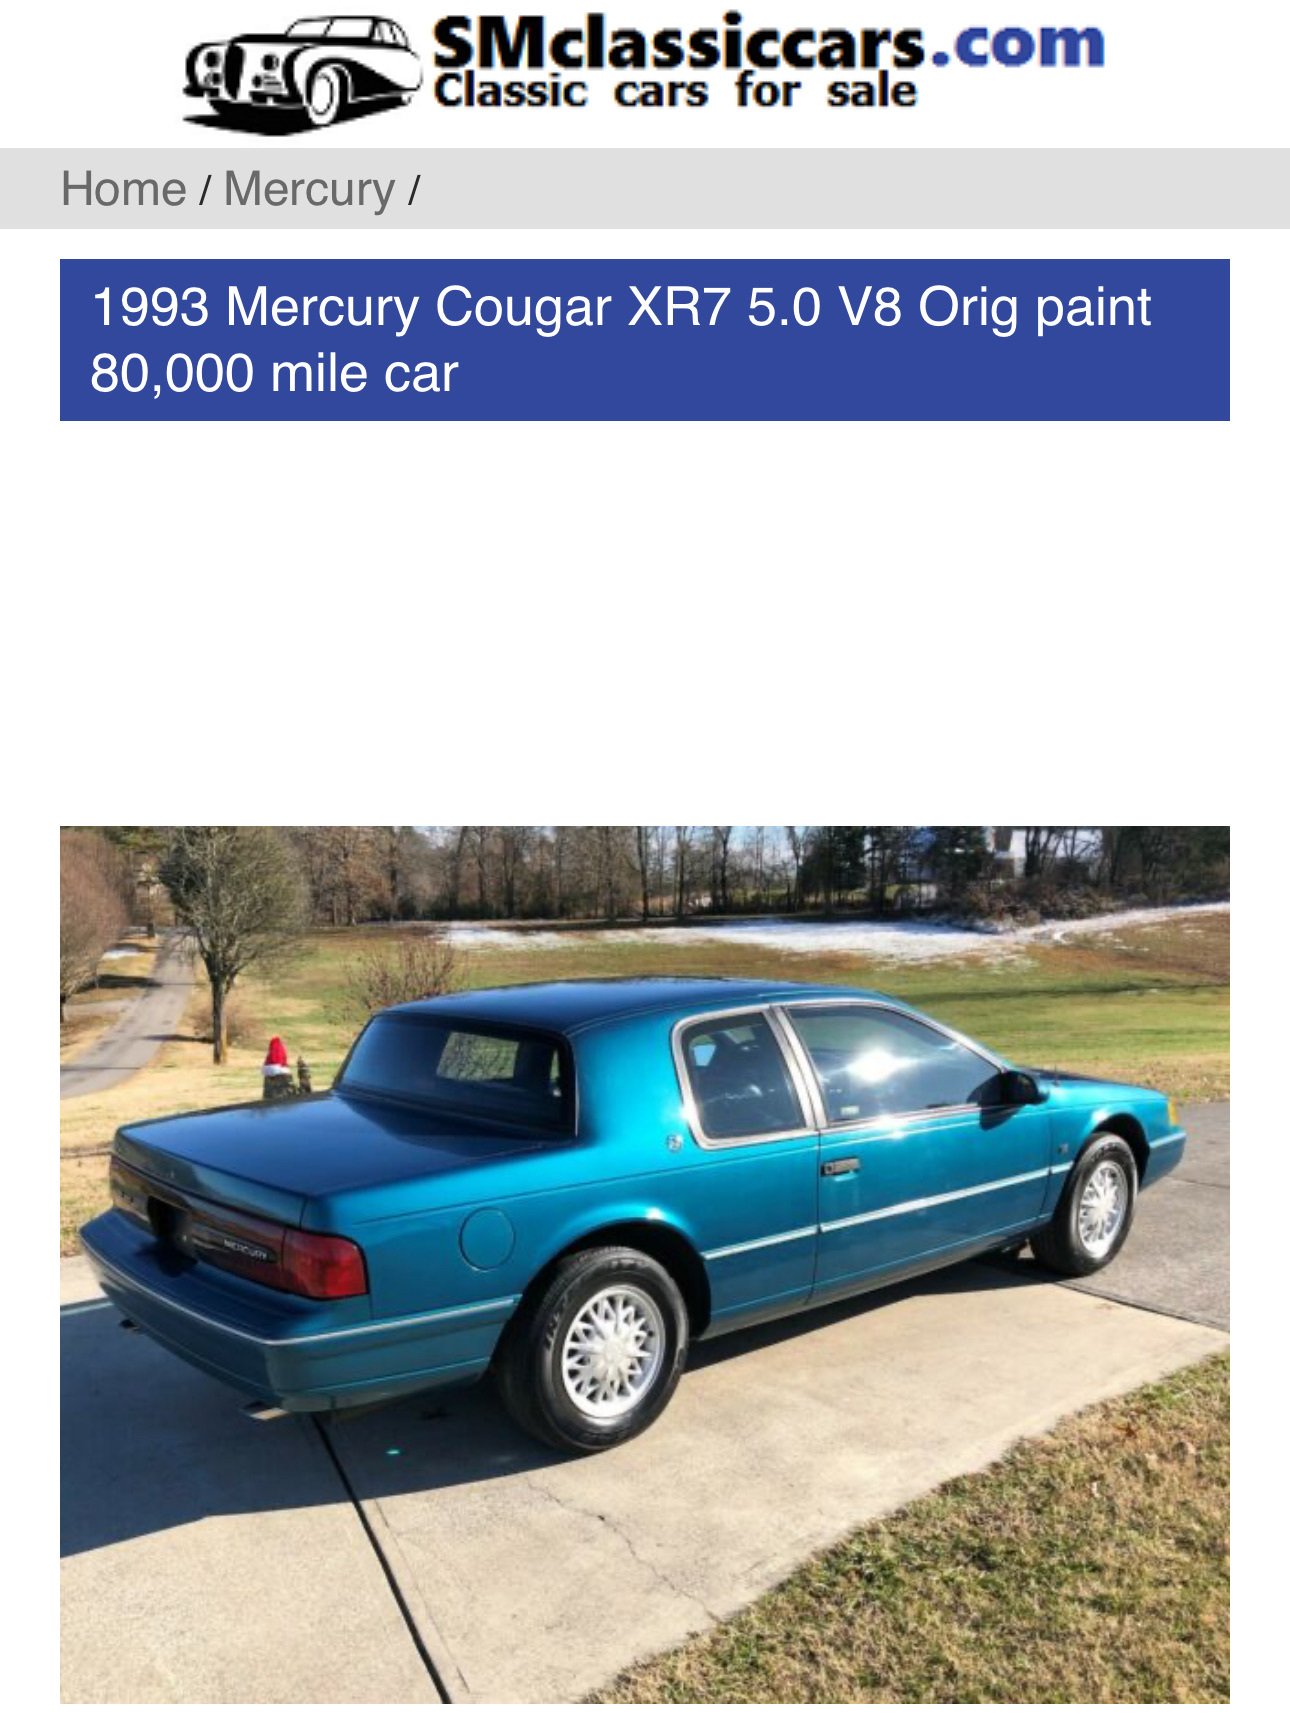 1993 Cougar XR-7